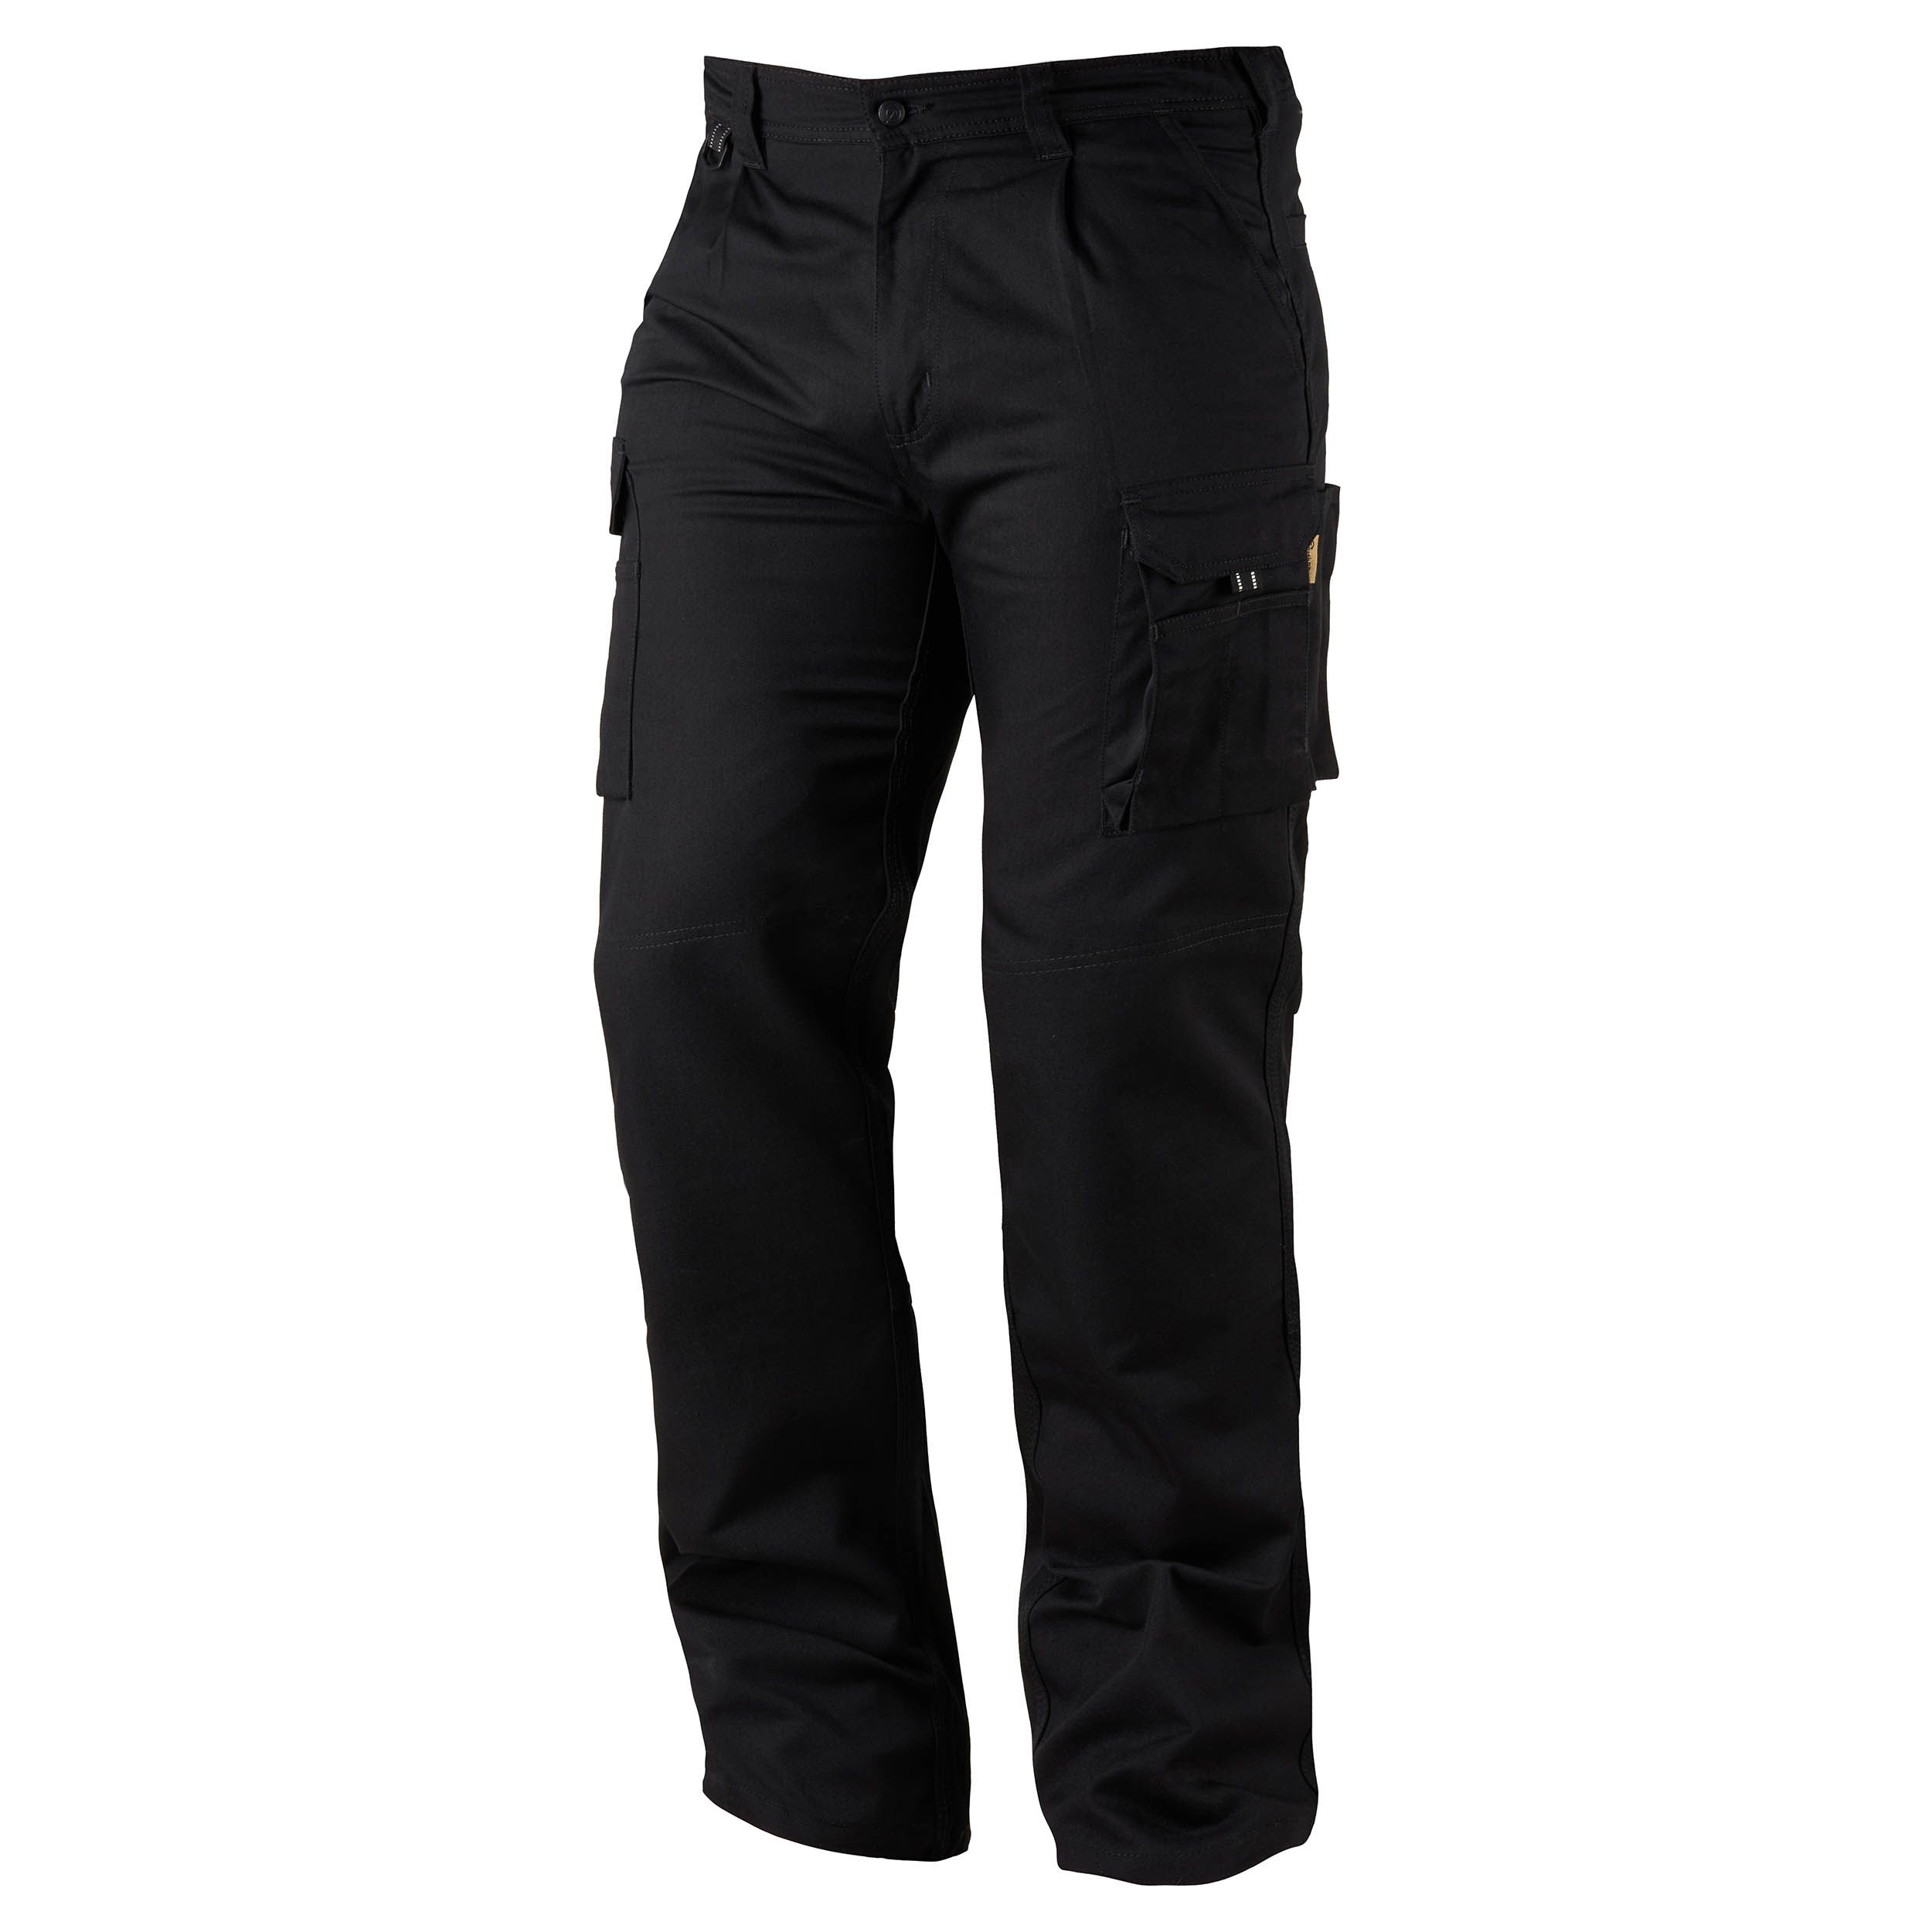 Orn Hawk EarthPro Combat Trouser Black Men's Cotton, Recycled Polyester Hard Wear Trousers 30in, 76 → 81cm Waist